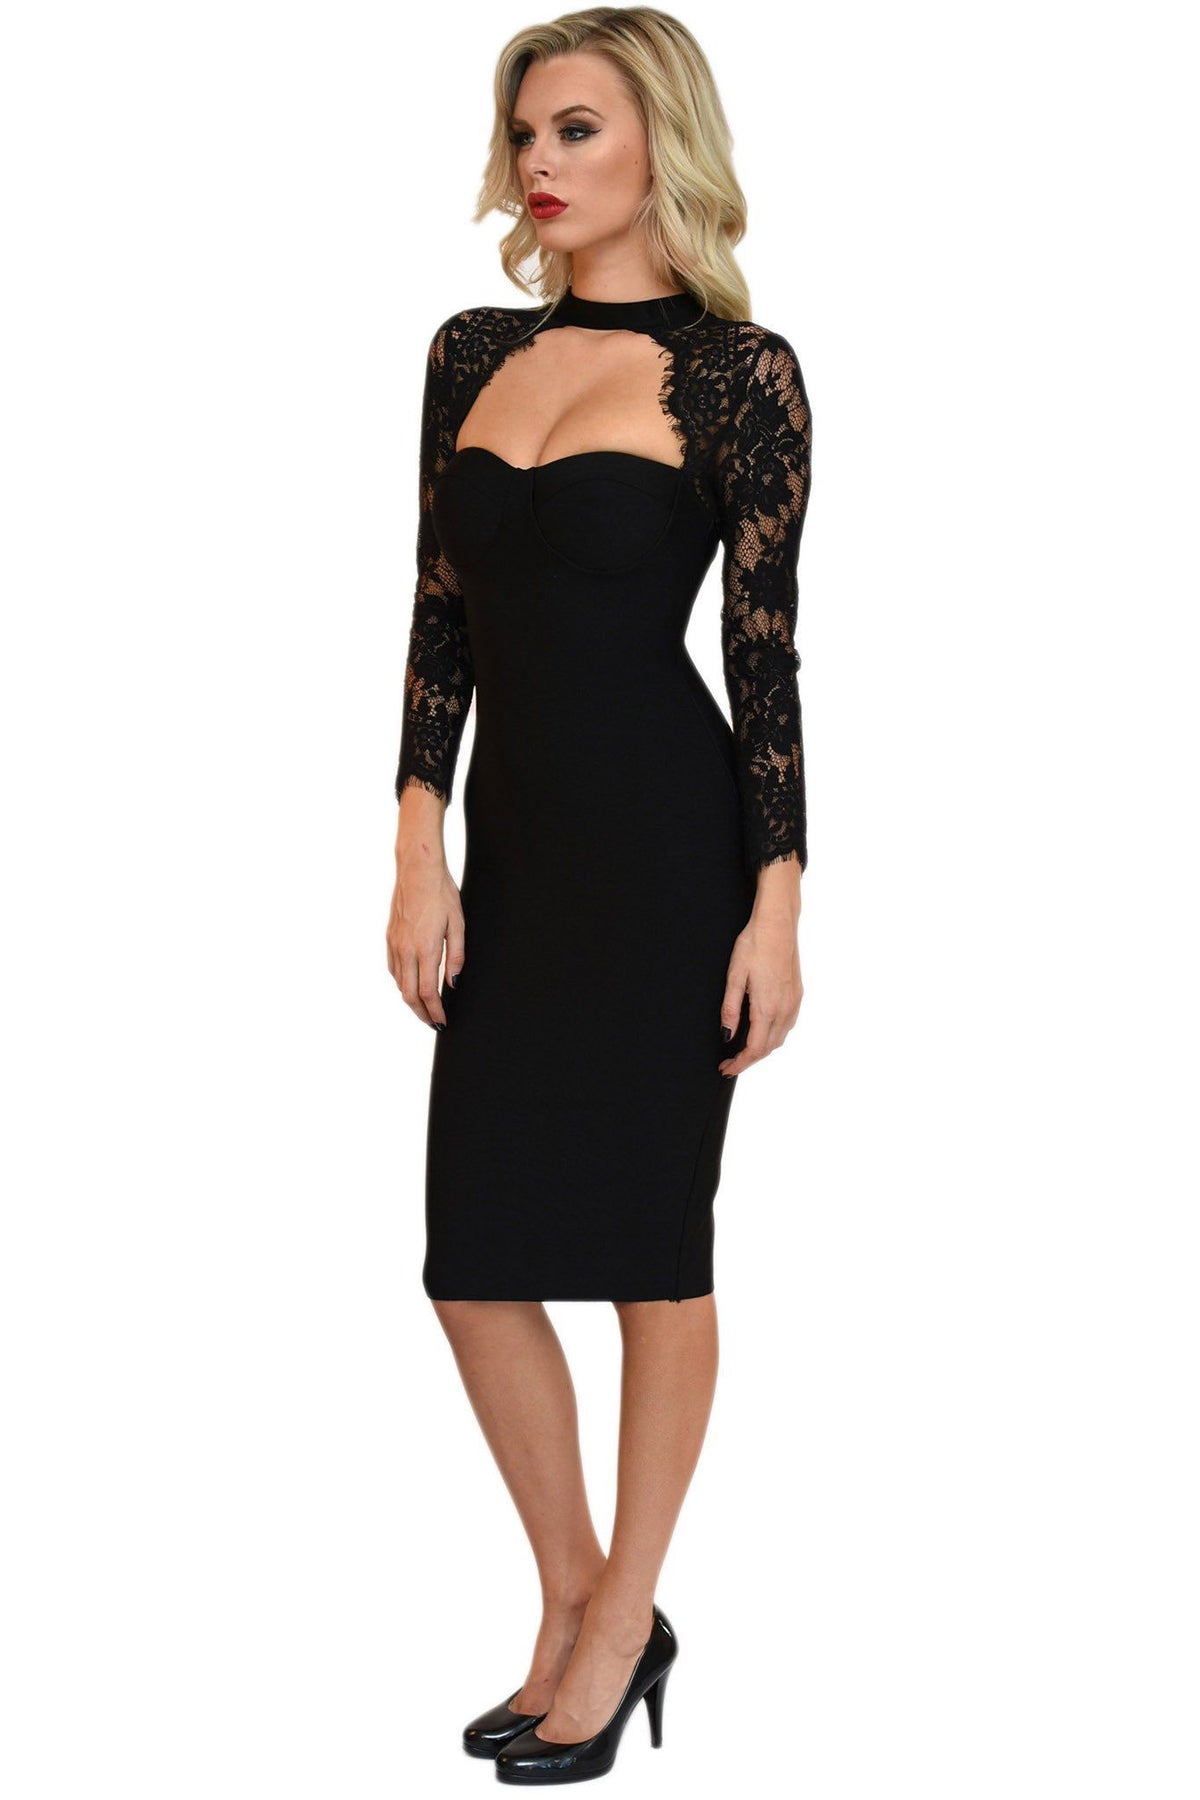 Side image of black lace long-sleeve midi-length bandage dress with sweetheart choker neckline, scalloped eyelash lace details, sheer lace sleeves and back